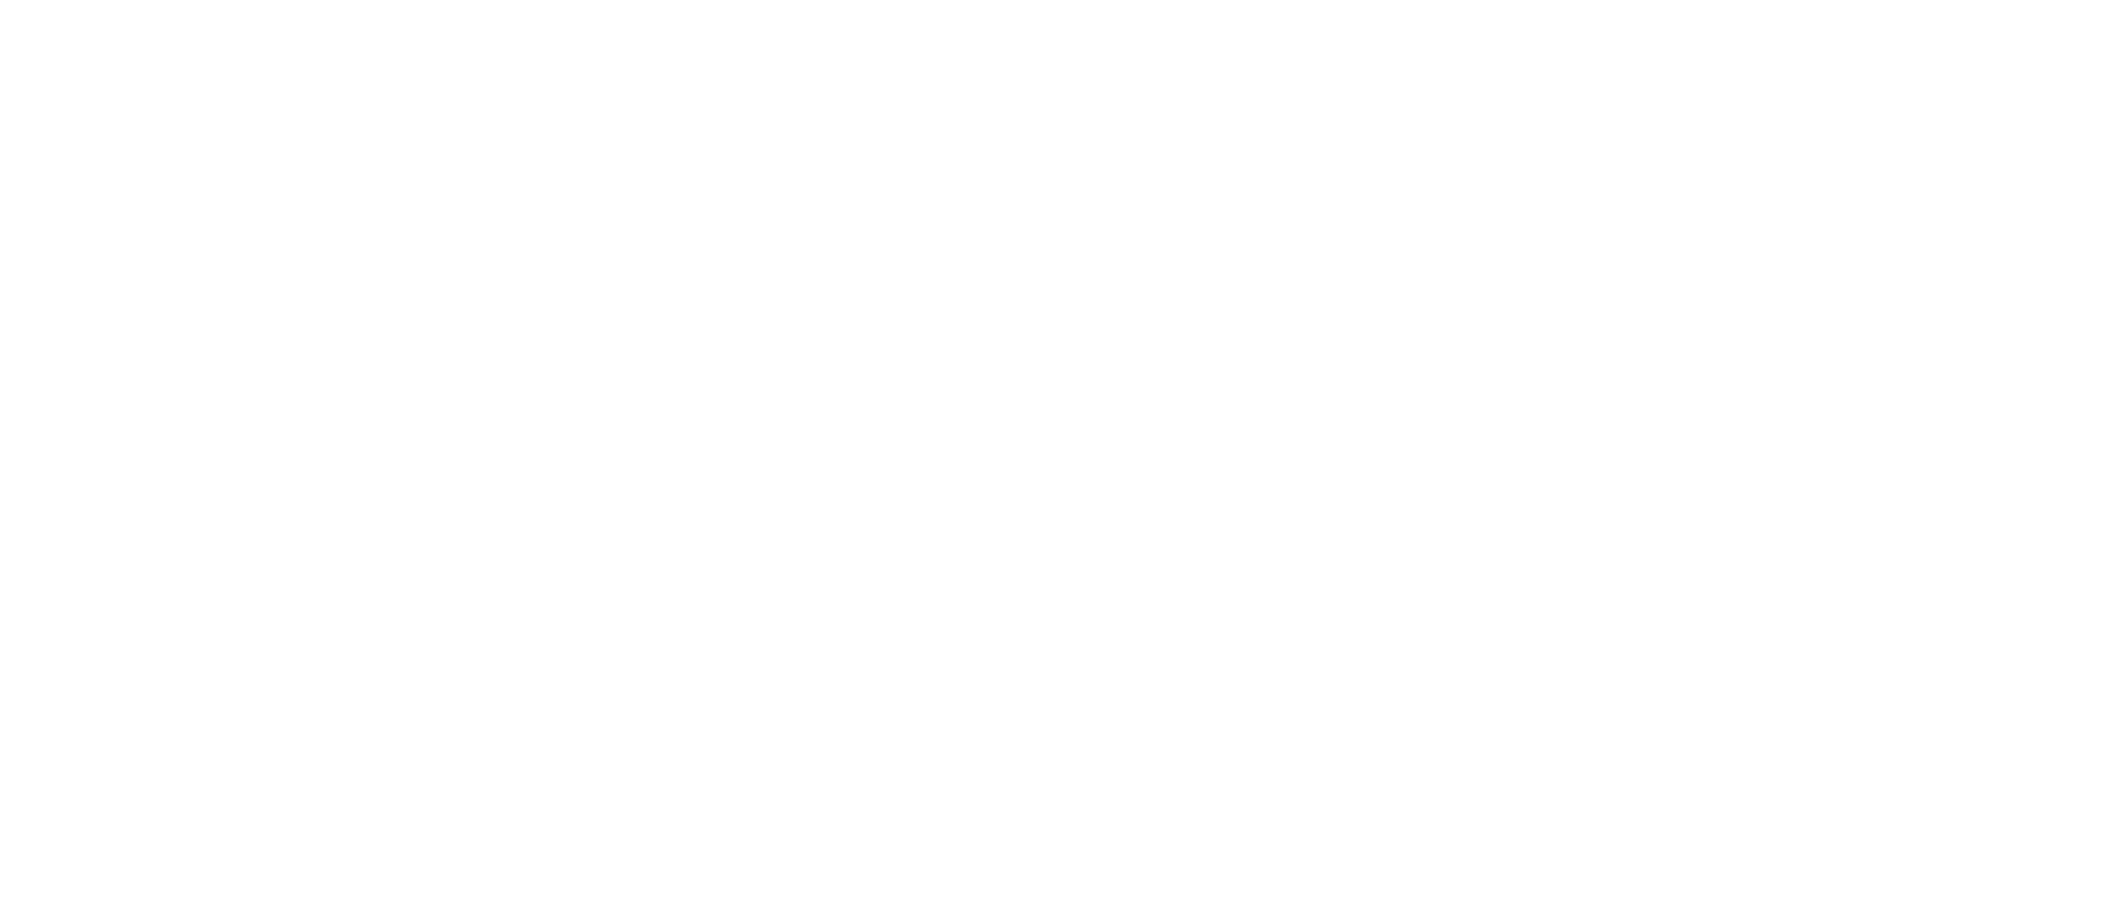 The Prince Blucher